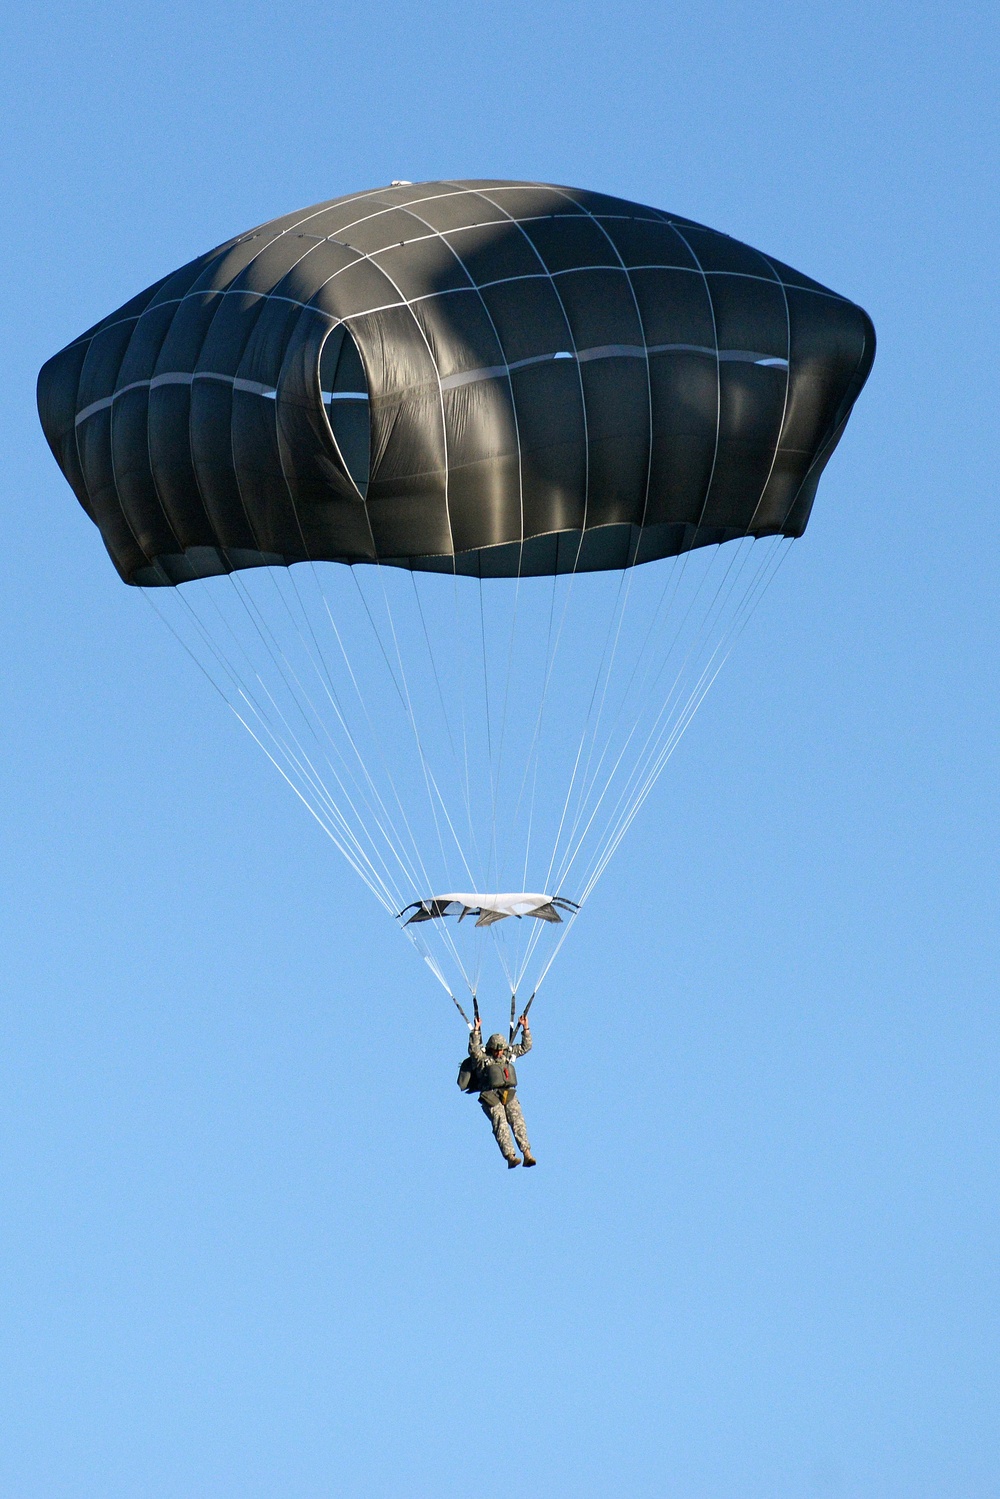 173rd Infantry Brigade Combat Team (Airborne)  conduct Airborne operations